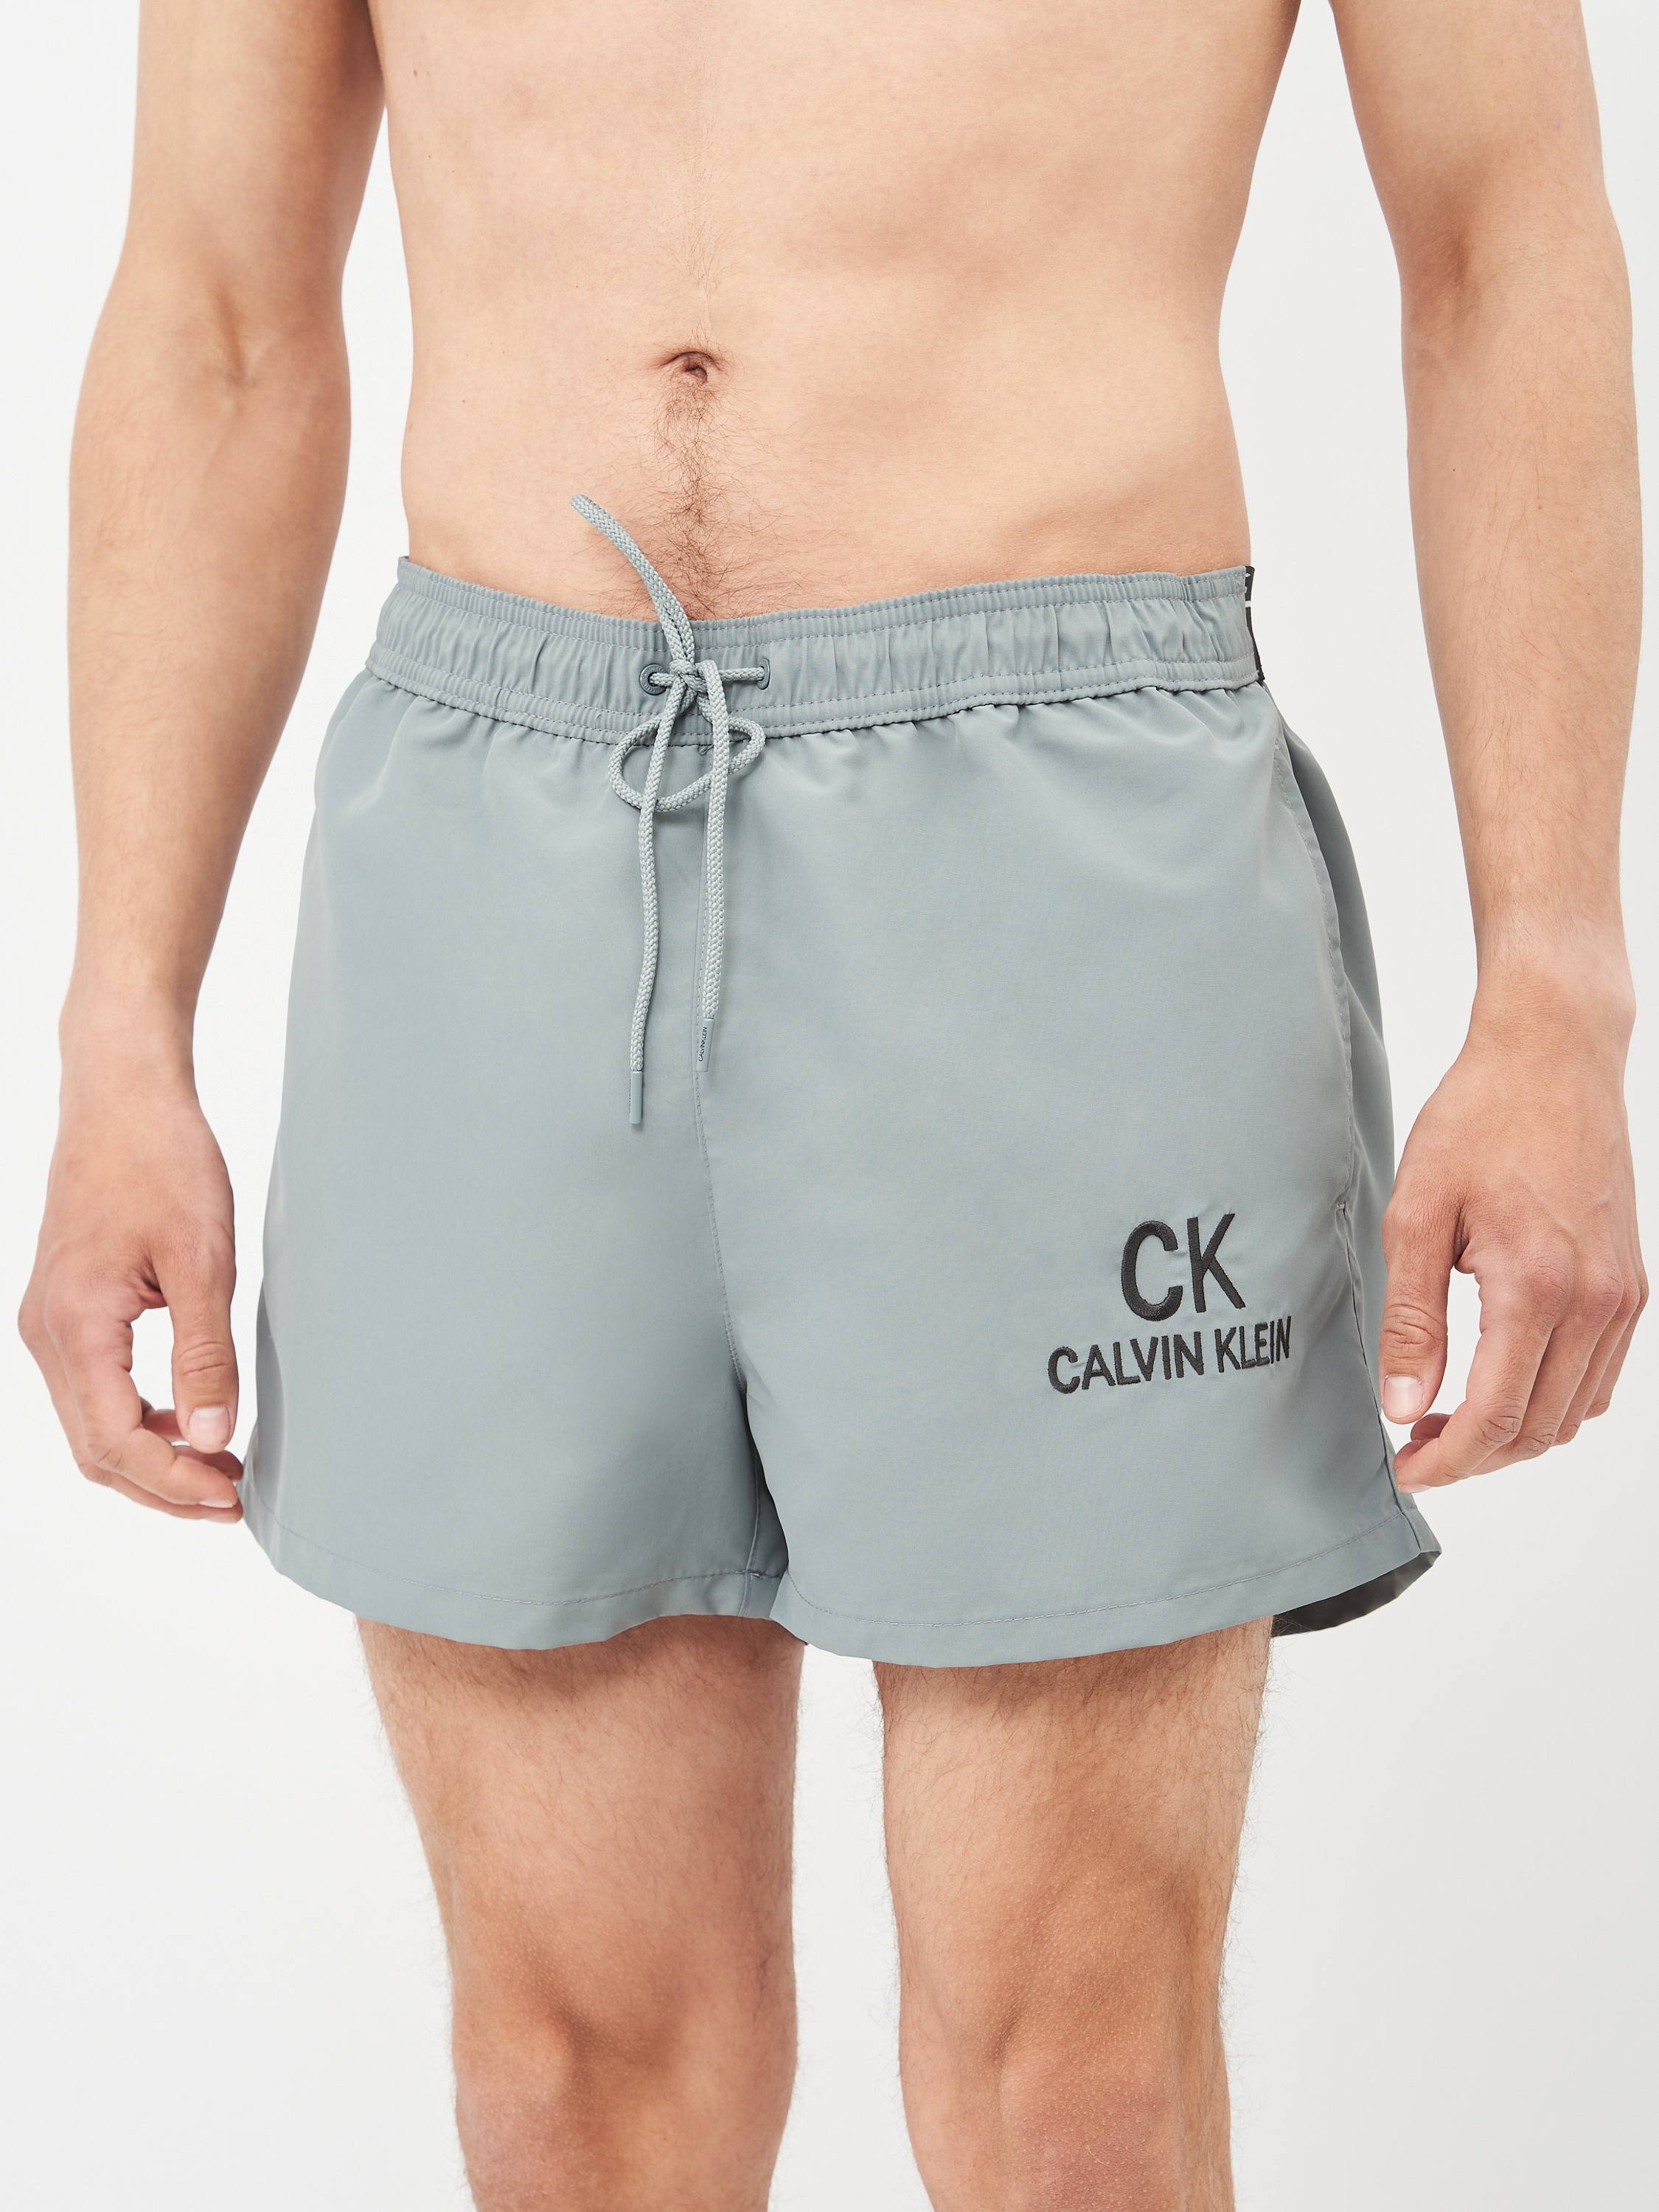 

Шорты для плавания Calvin Klein Underwear Short Drawstring KM0KM00562-PN6 L Overcast Grey